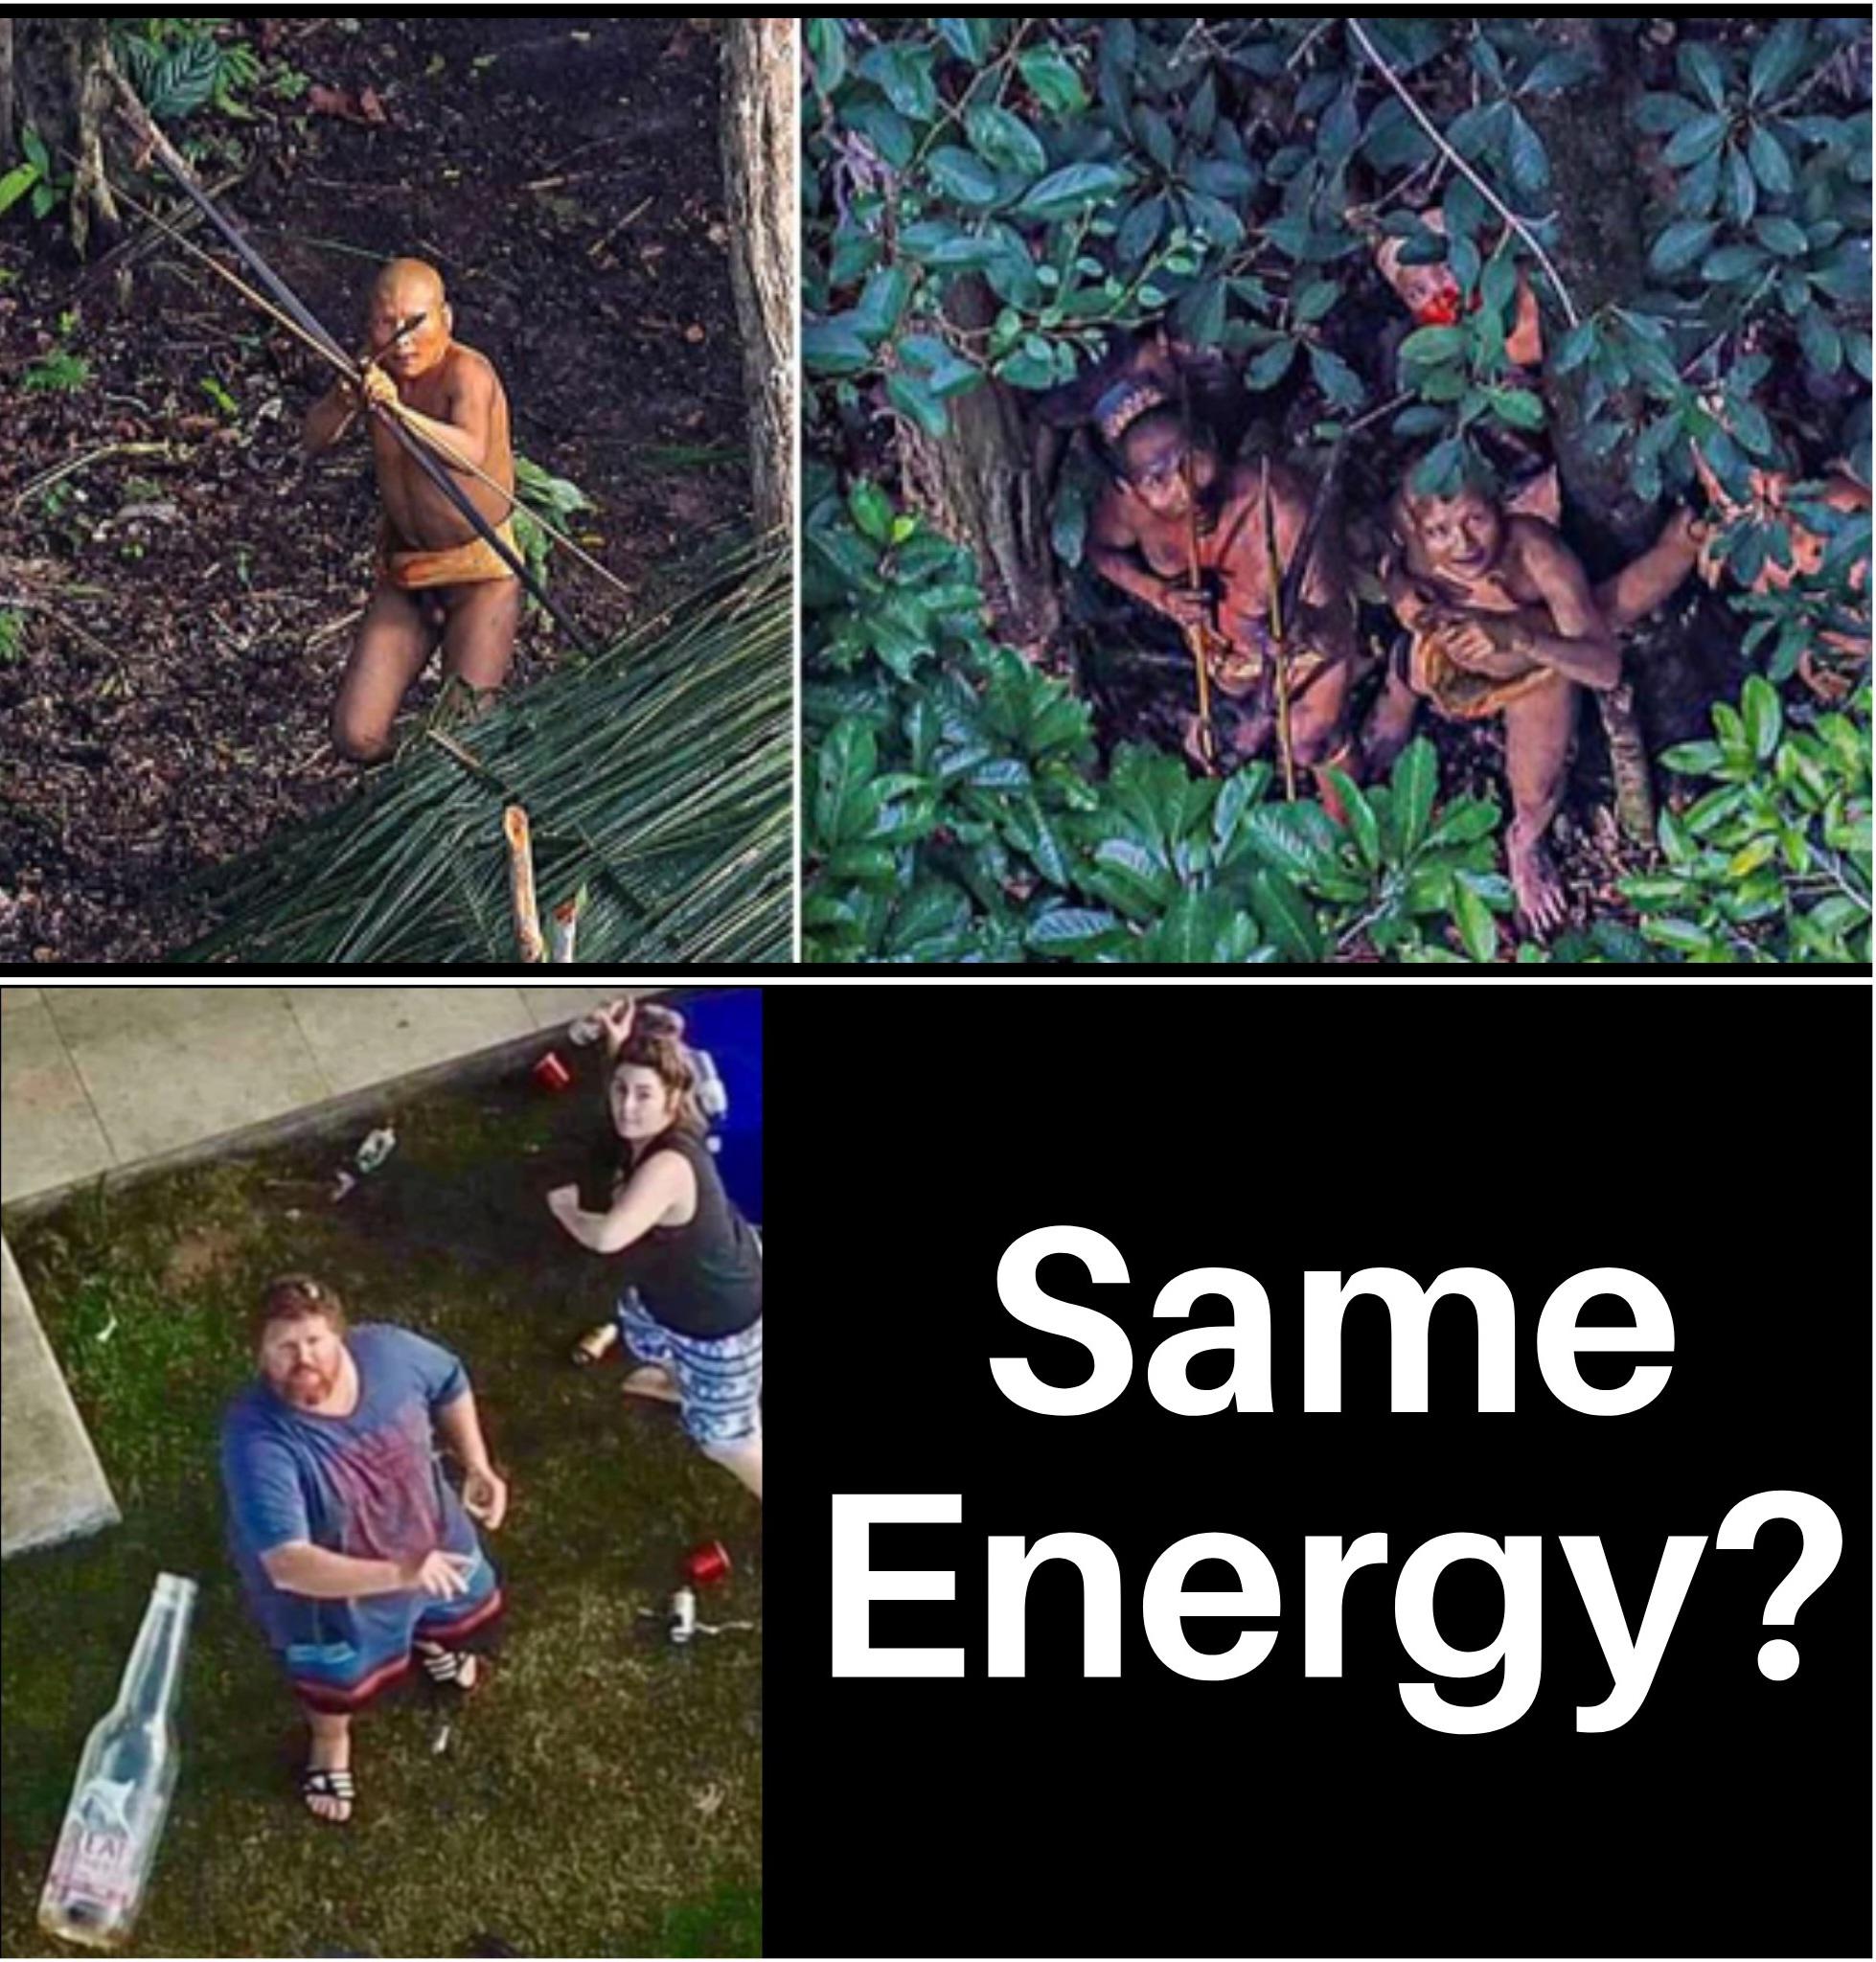 funny memes - nature - Same Energy?